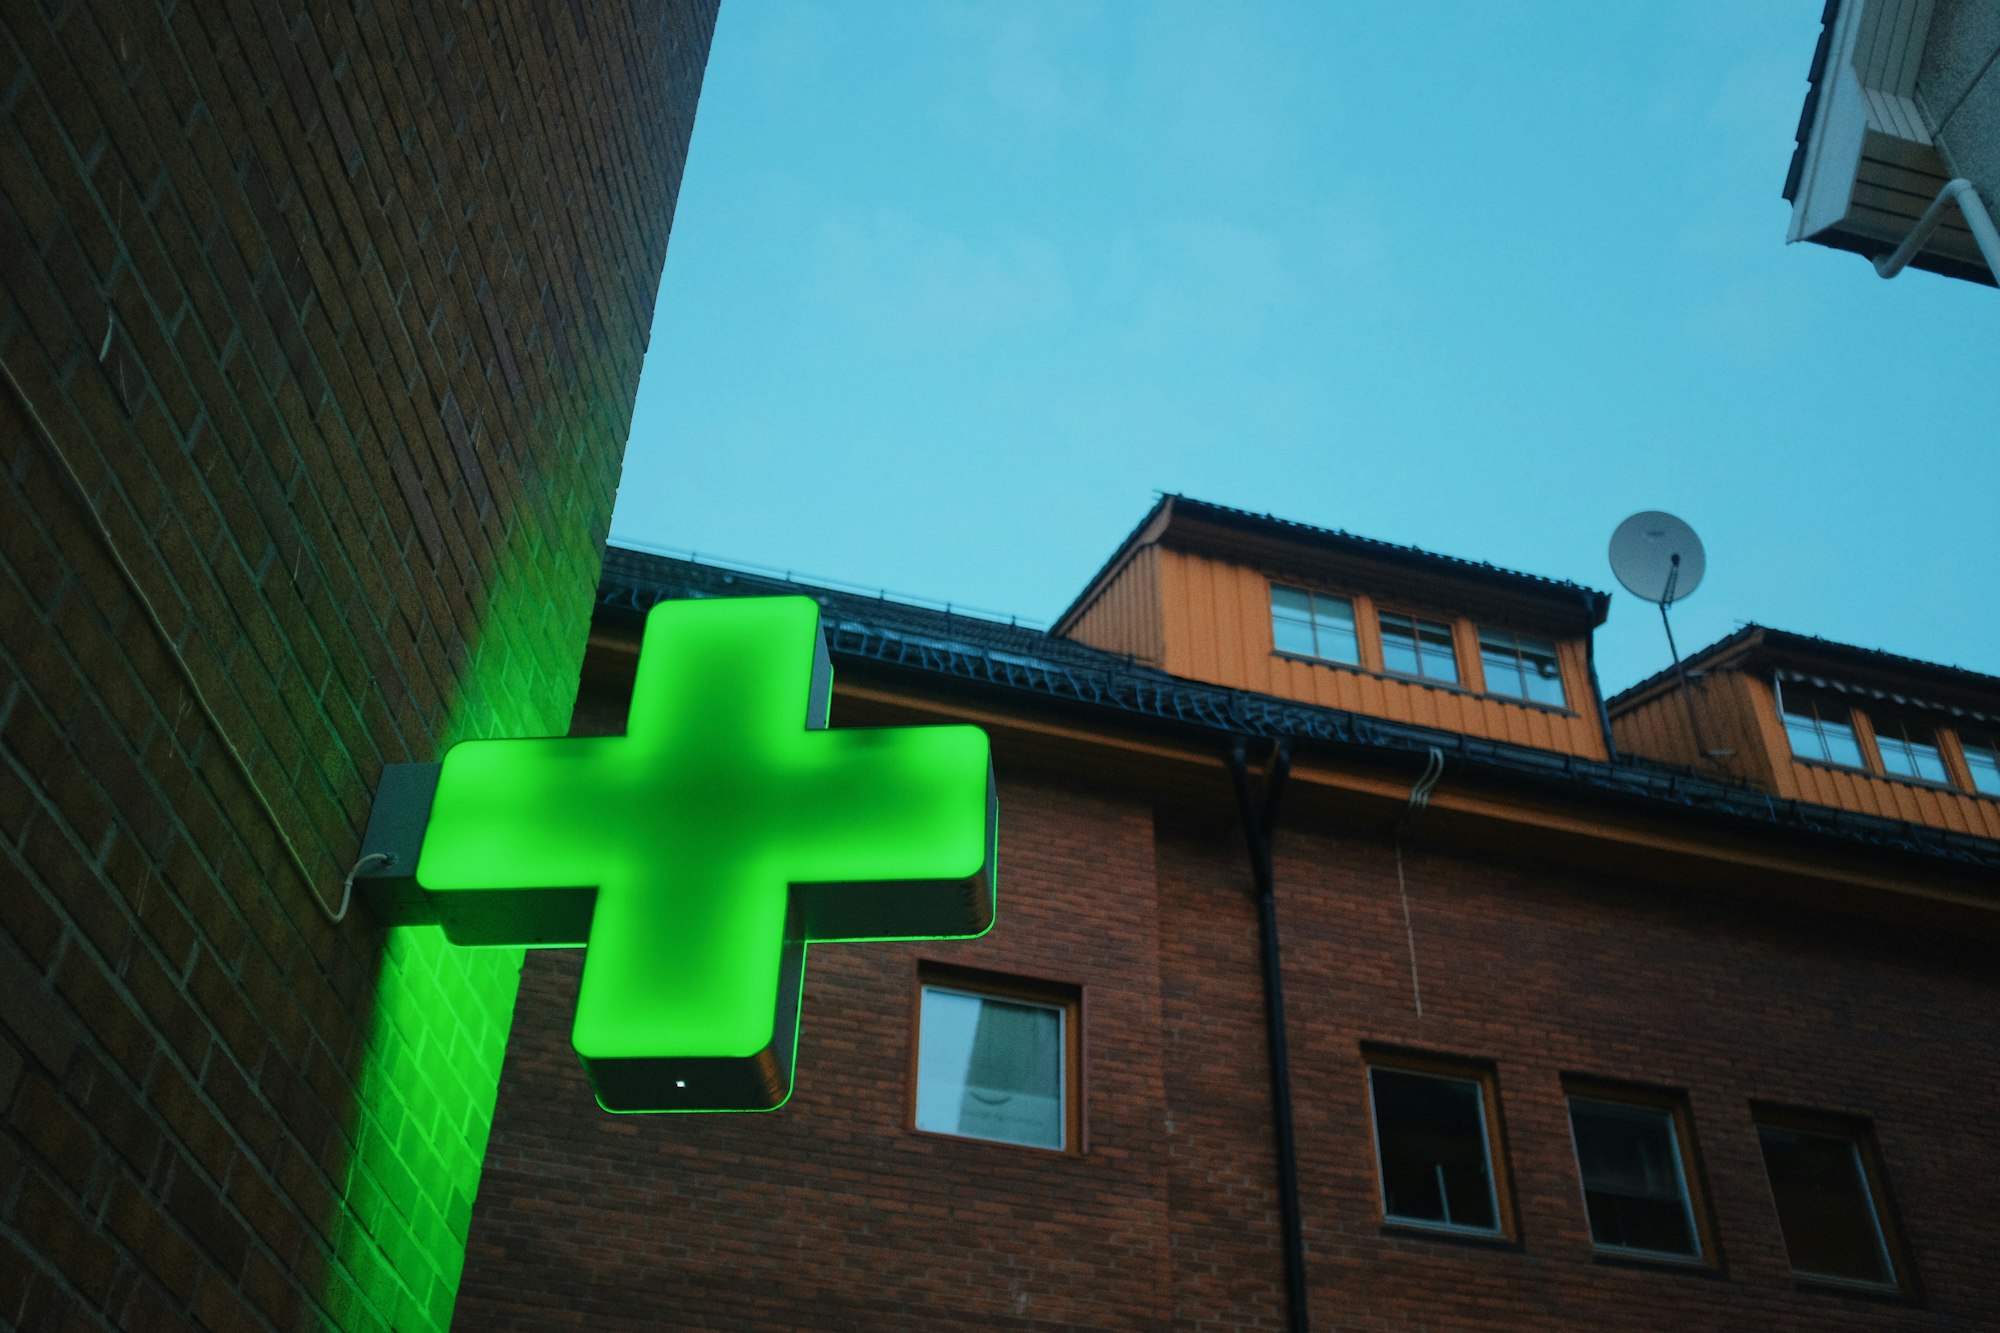 green neon cross, pharmacy/hospital sign on a building, evening blue light